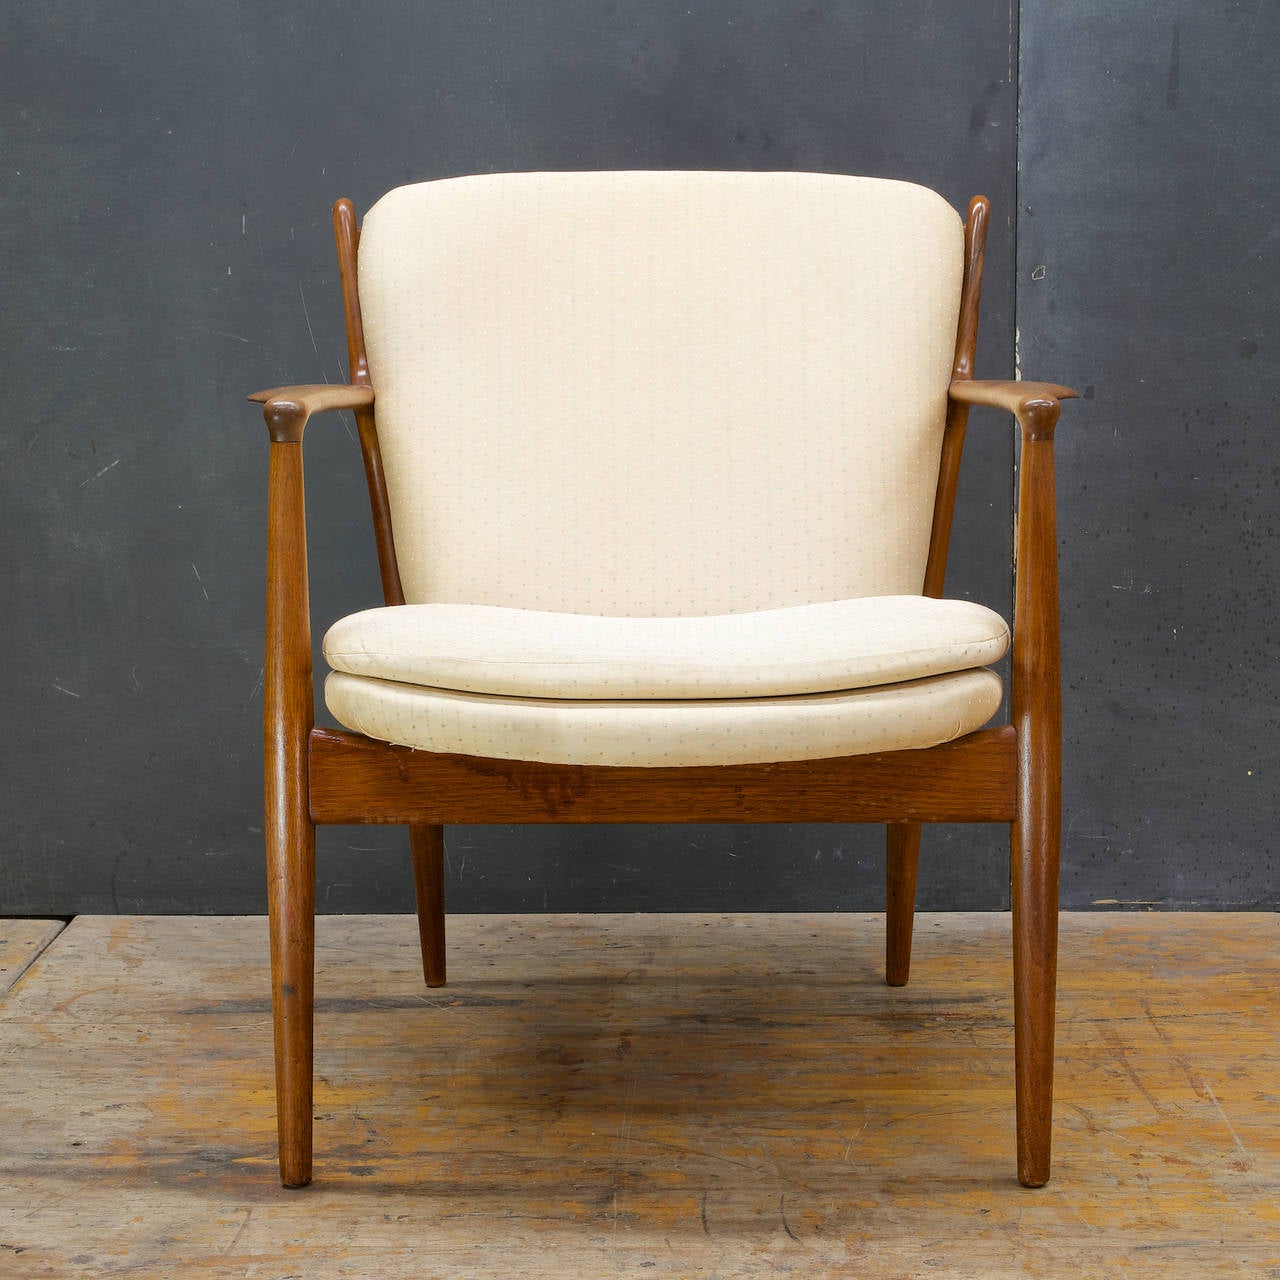 Danish Finn Juhl Walnut Delegate Chair in Original Condition by Baker Furniture Co